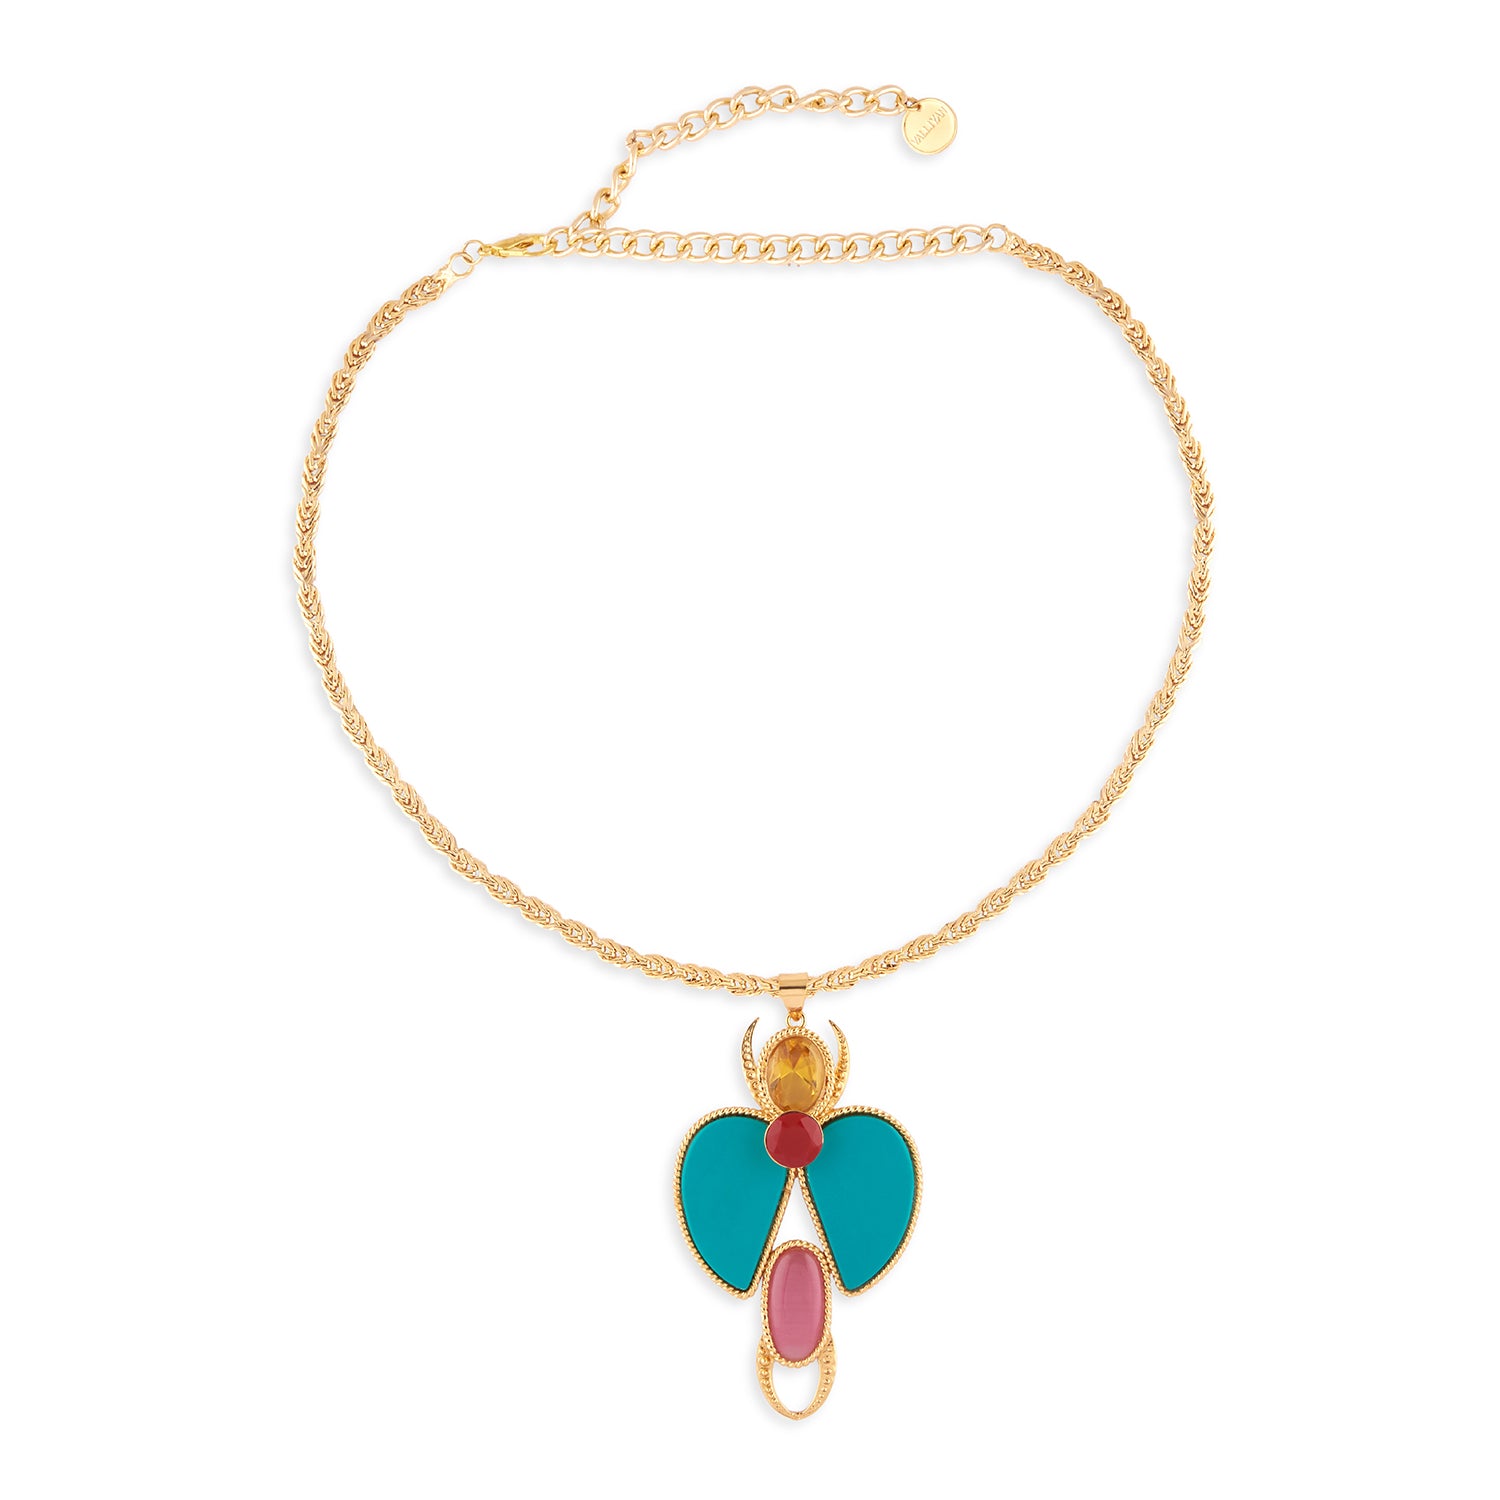 Valliyan Necklaces and Chokers : Buy Valliyan Floral Choker Online